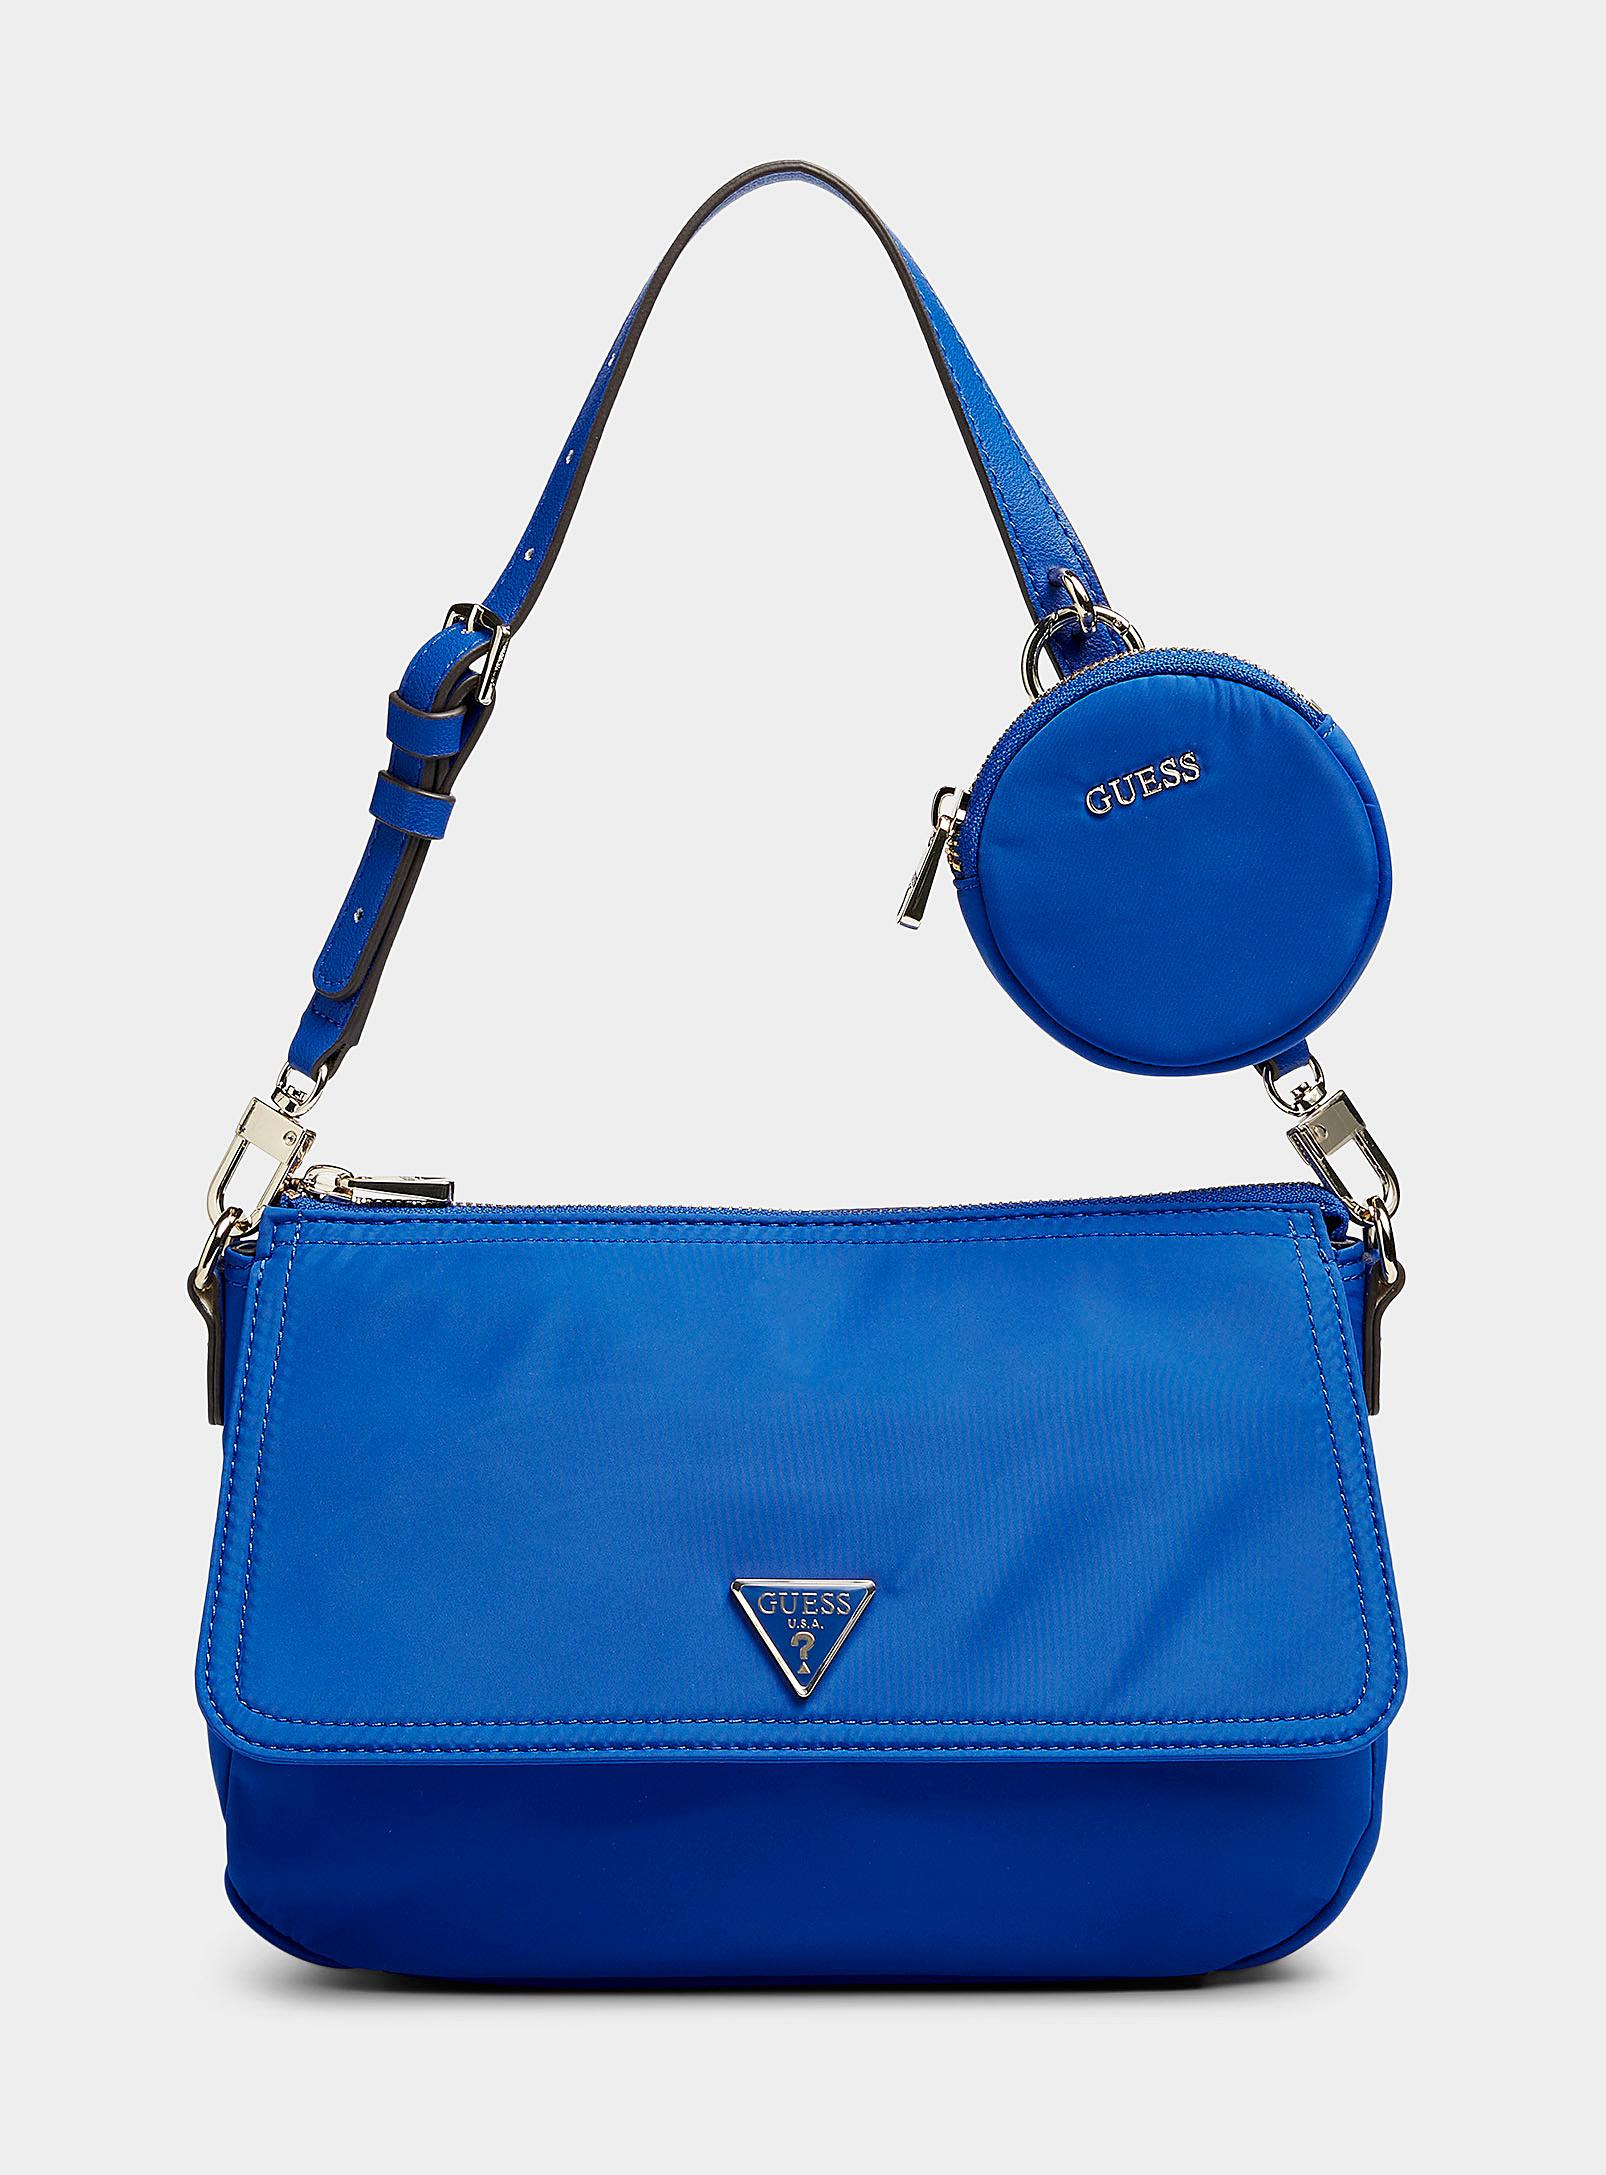 Guess Gemma Eco Baguette Bag in Blue | Lyst